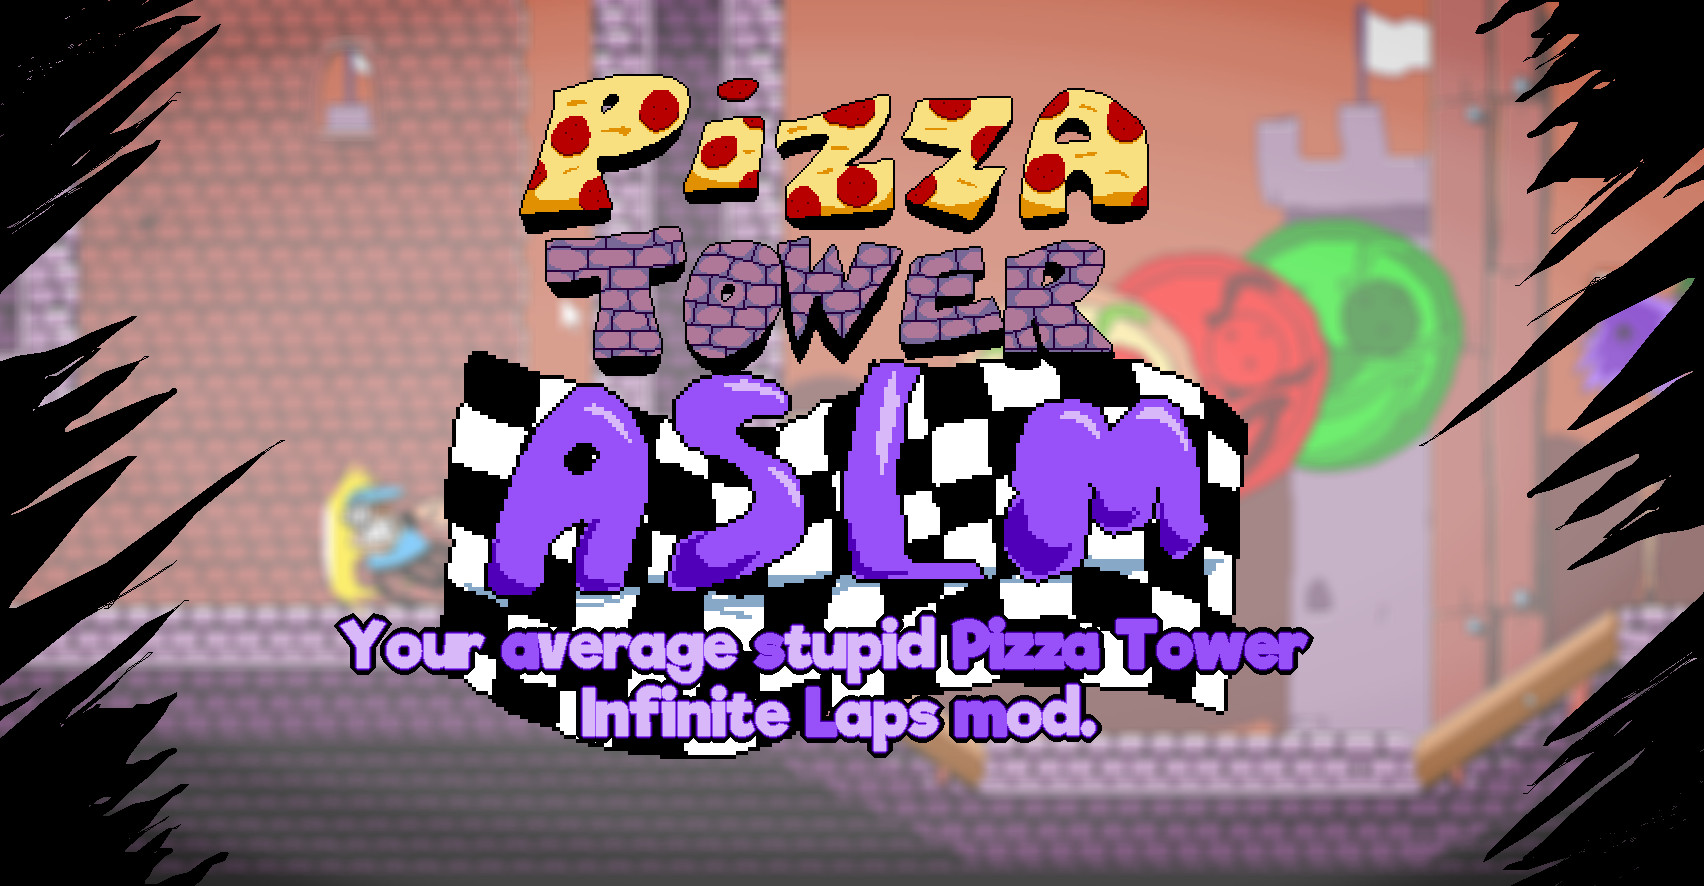 Pizza Tower: Average Stupid infinite Laps Mod [Pizza Tower] [Mods]